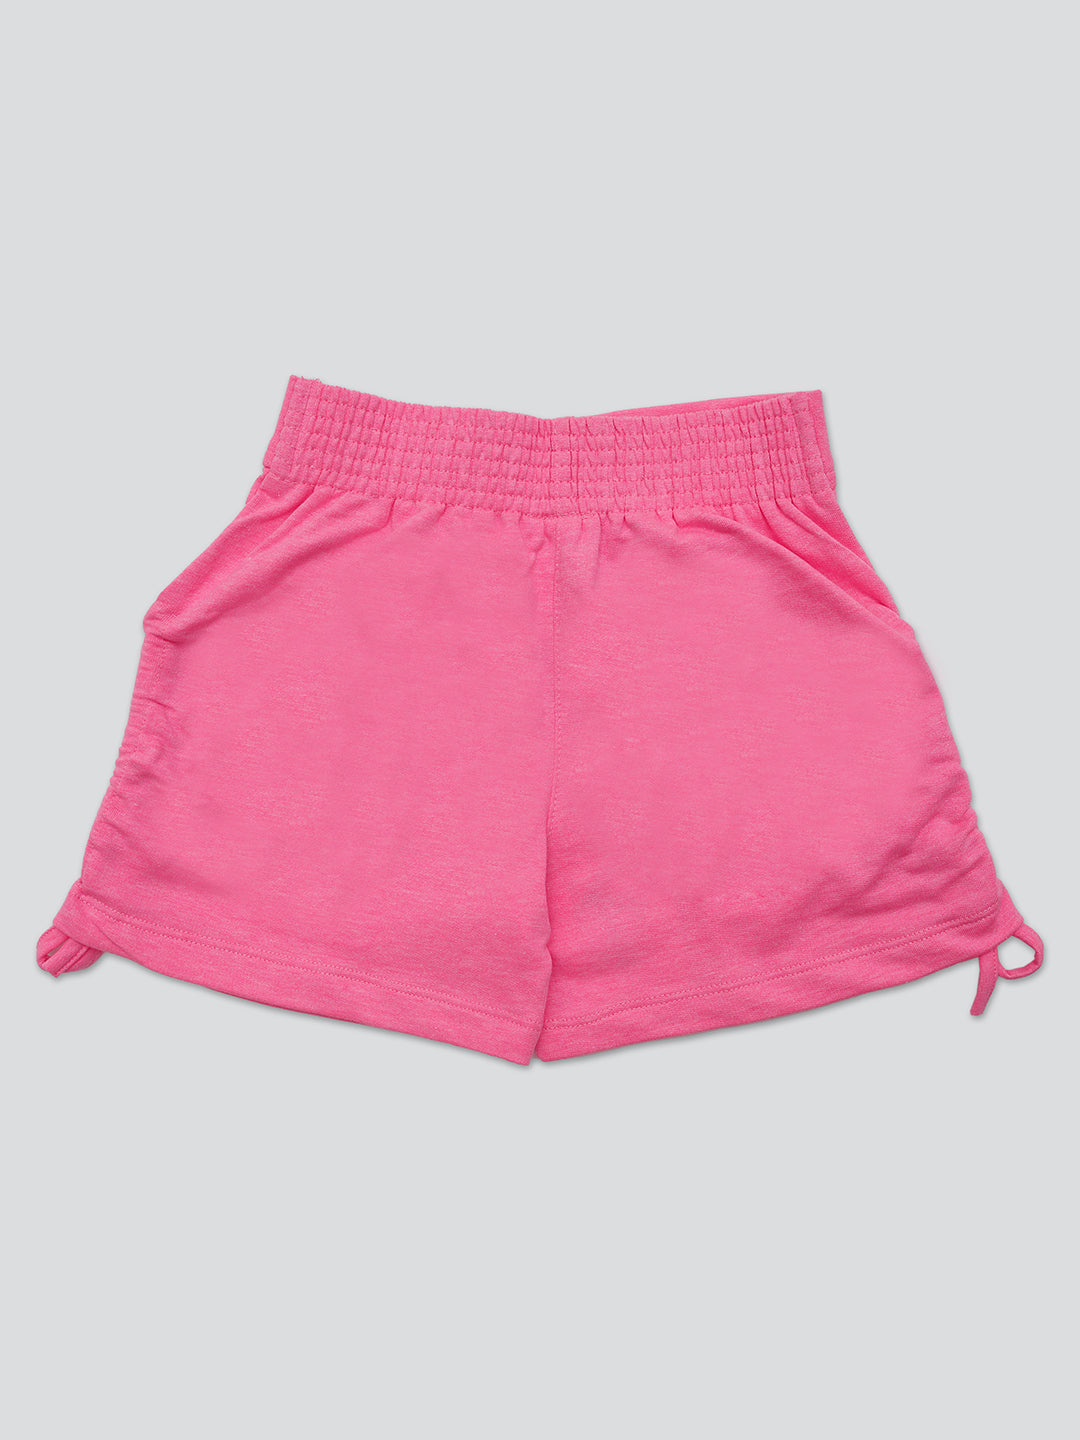 Pampolina Girls Solid Short- Pink